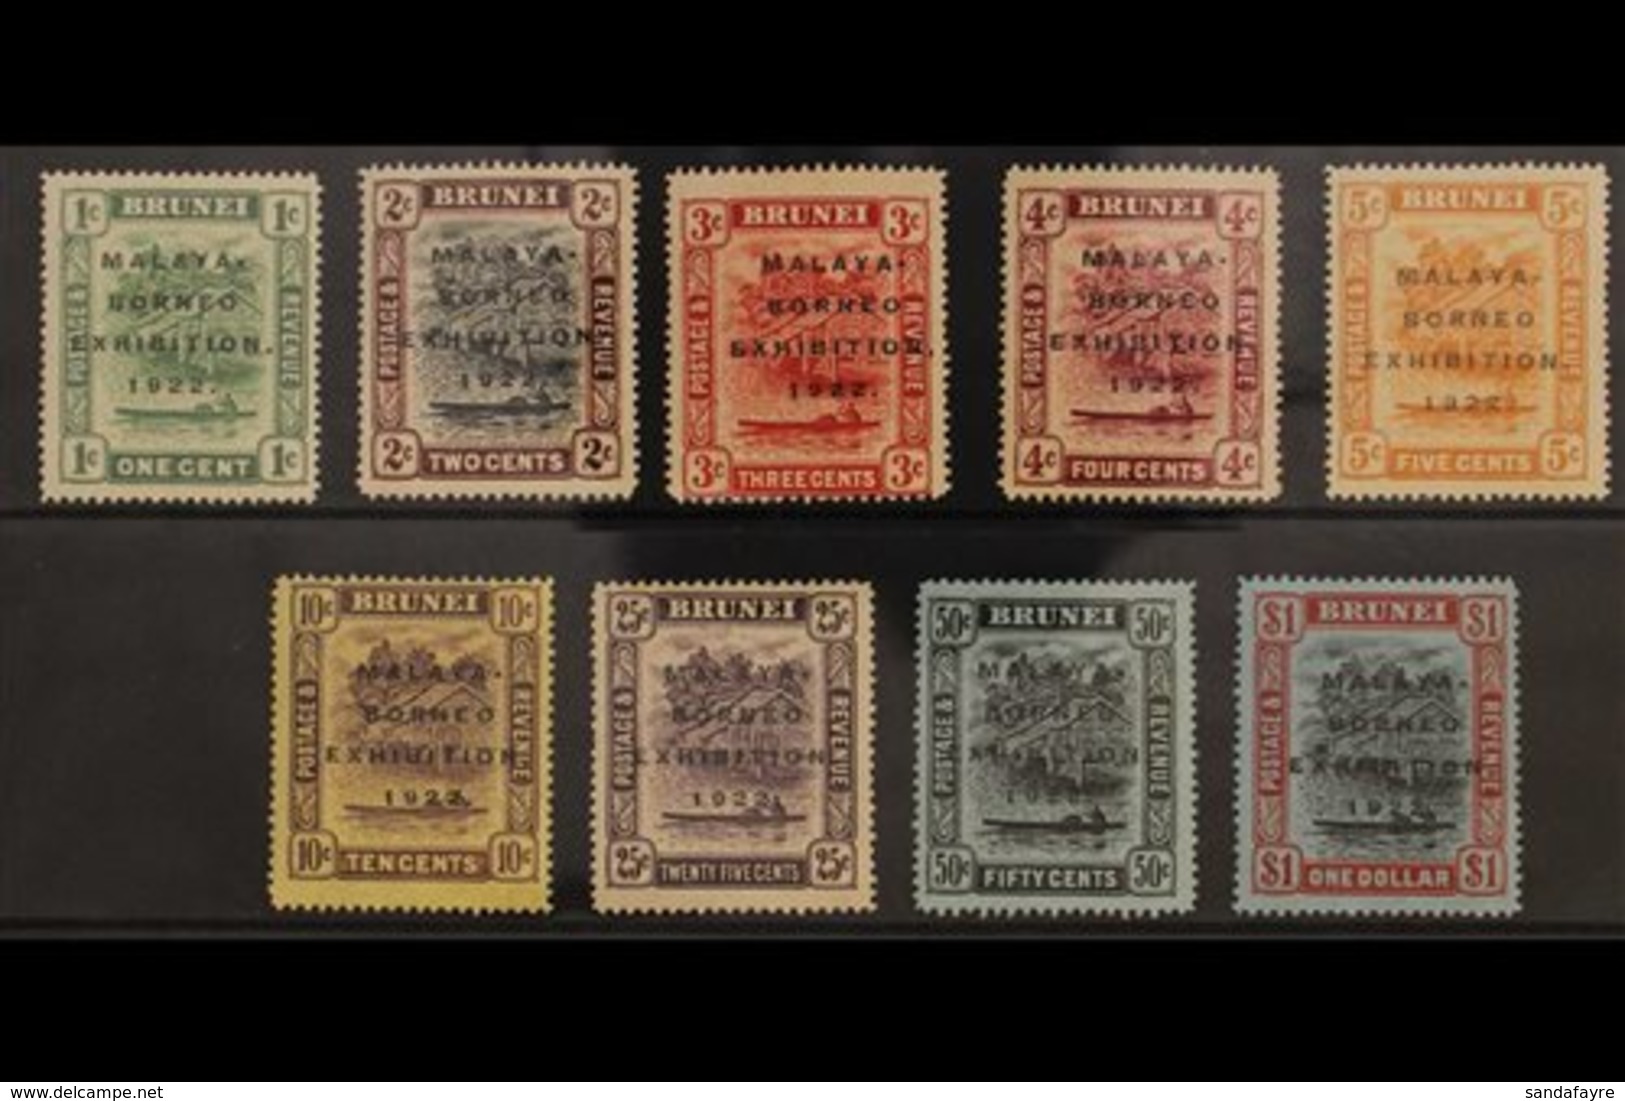 1922 MALAYA - BORNEO EXHIBITION. View On Brunei River "Exhibition" Overprints Complete Set, SG 51/59, Fine Mint, Fresh C - Brunei (...-1984)